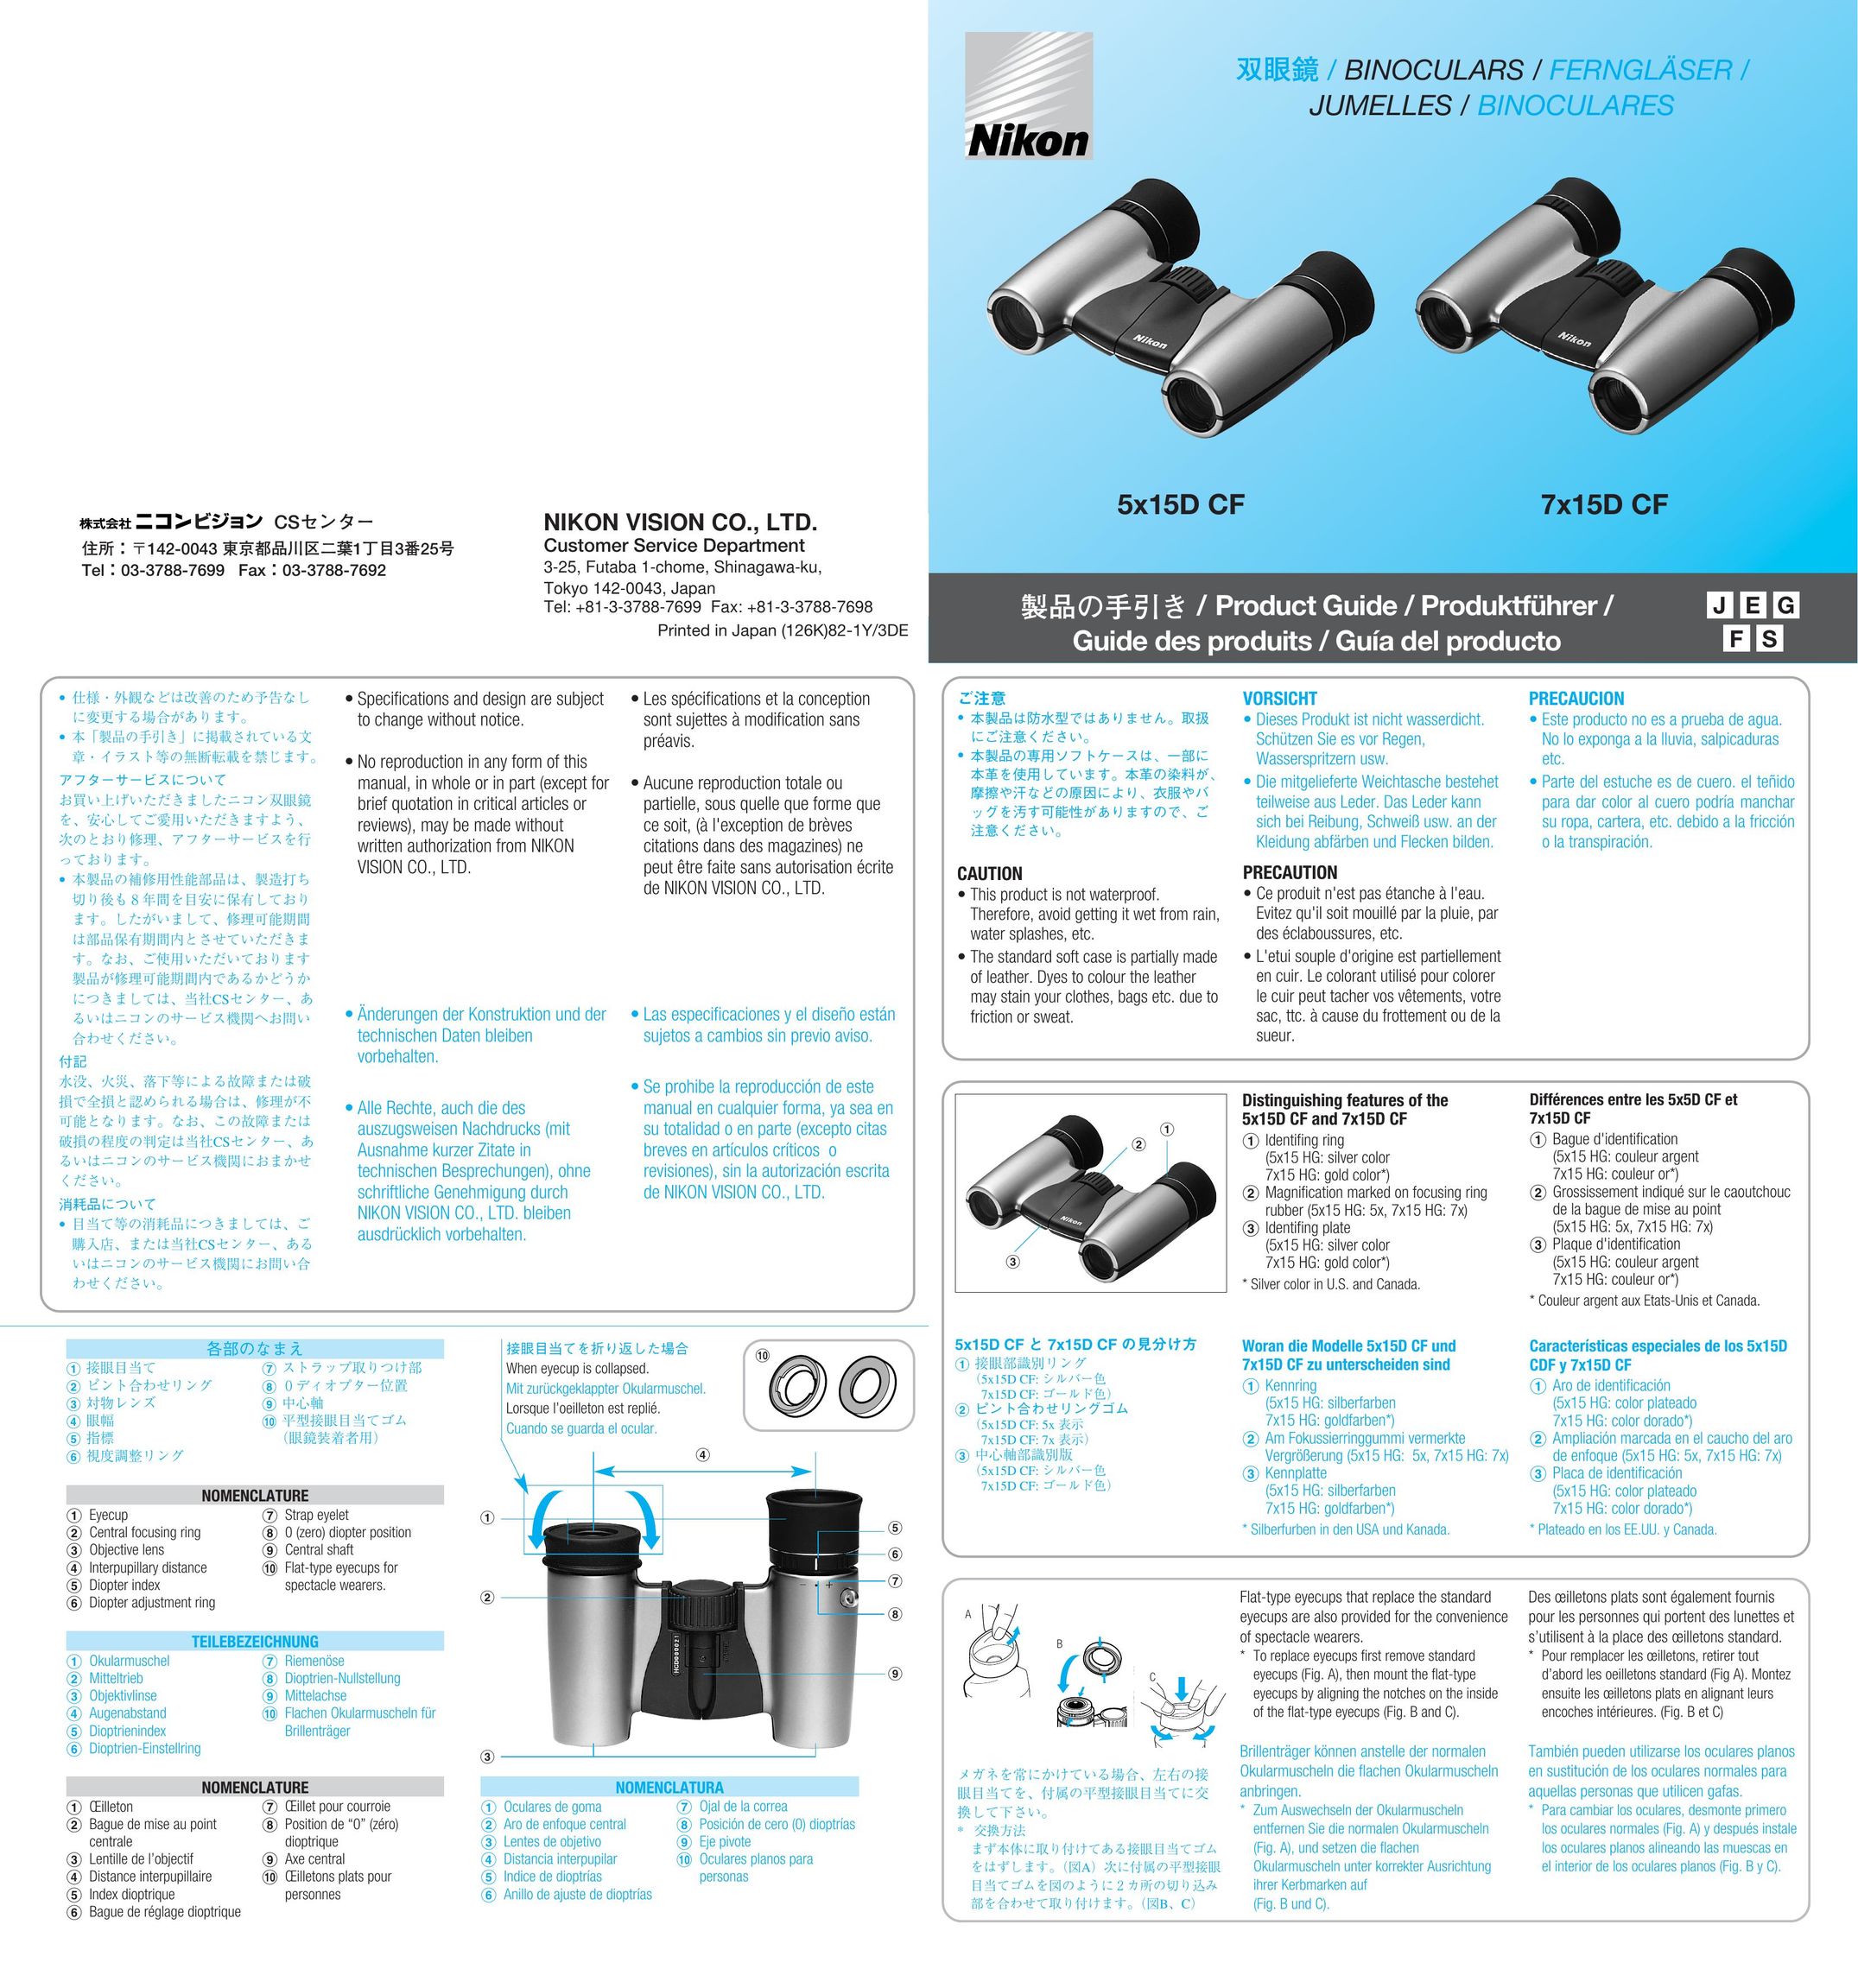 Nikon 5x15D CF Binoculars User Manual